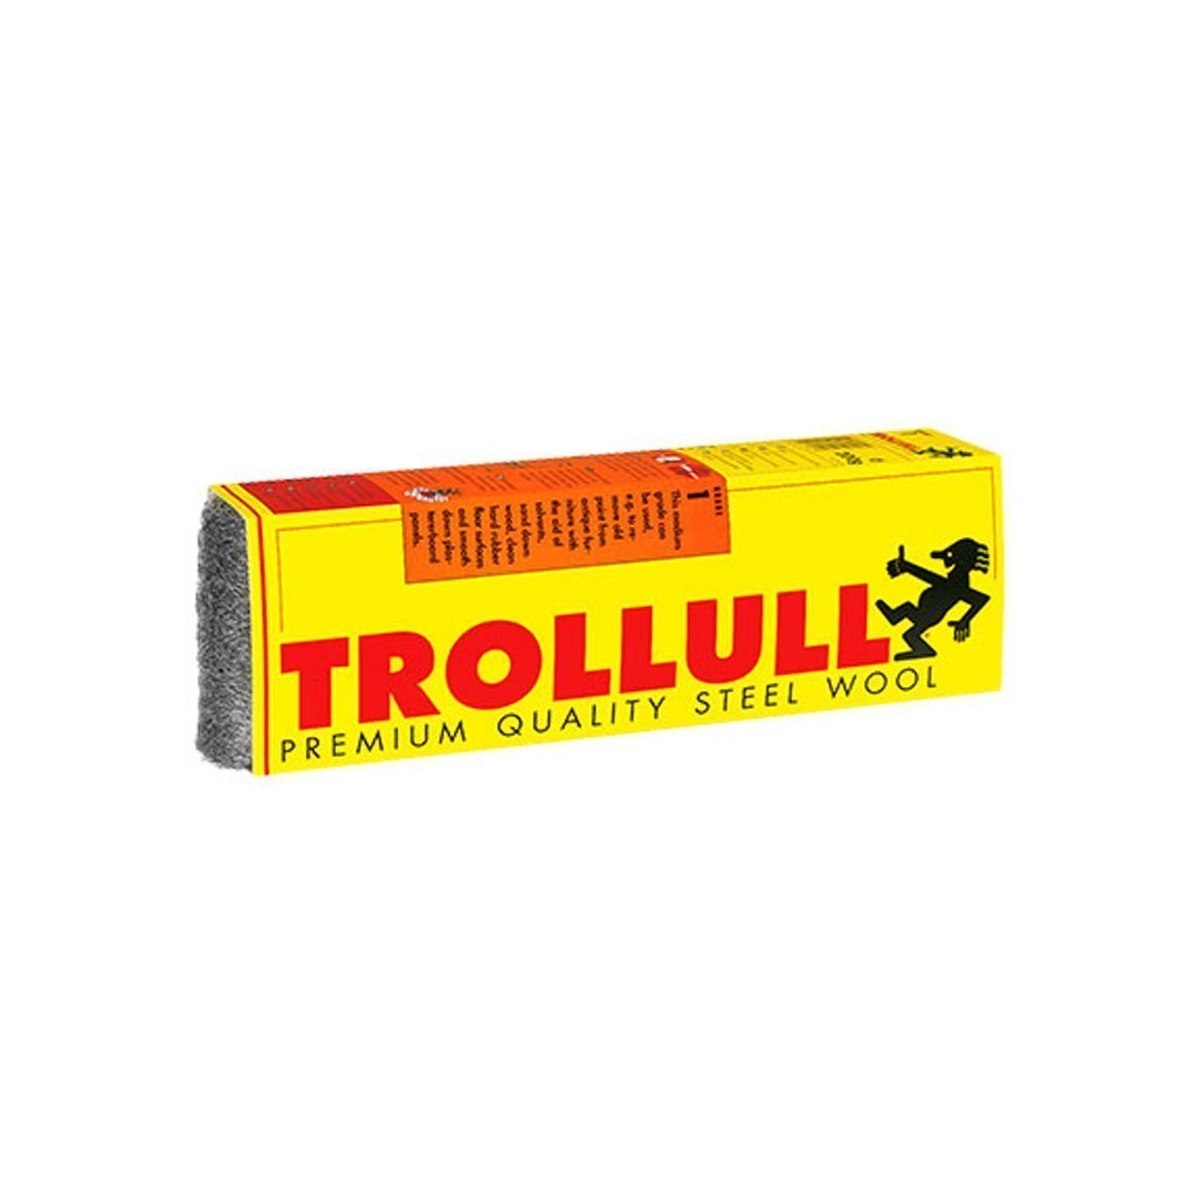 Trollull Steel Wool 200g Sleeve 3